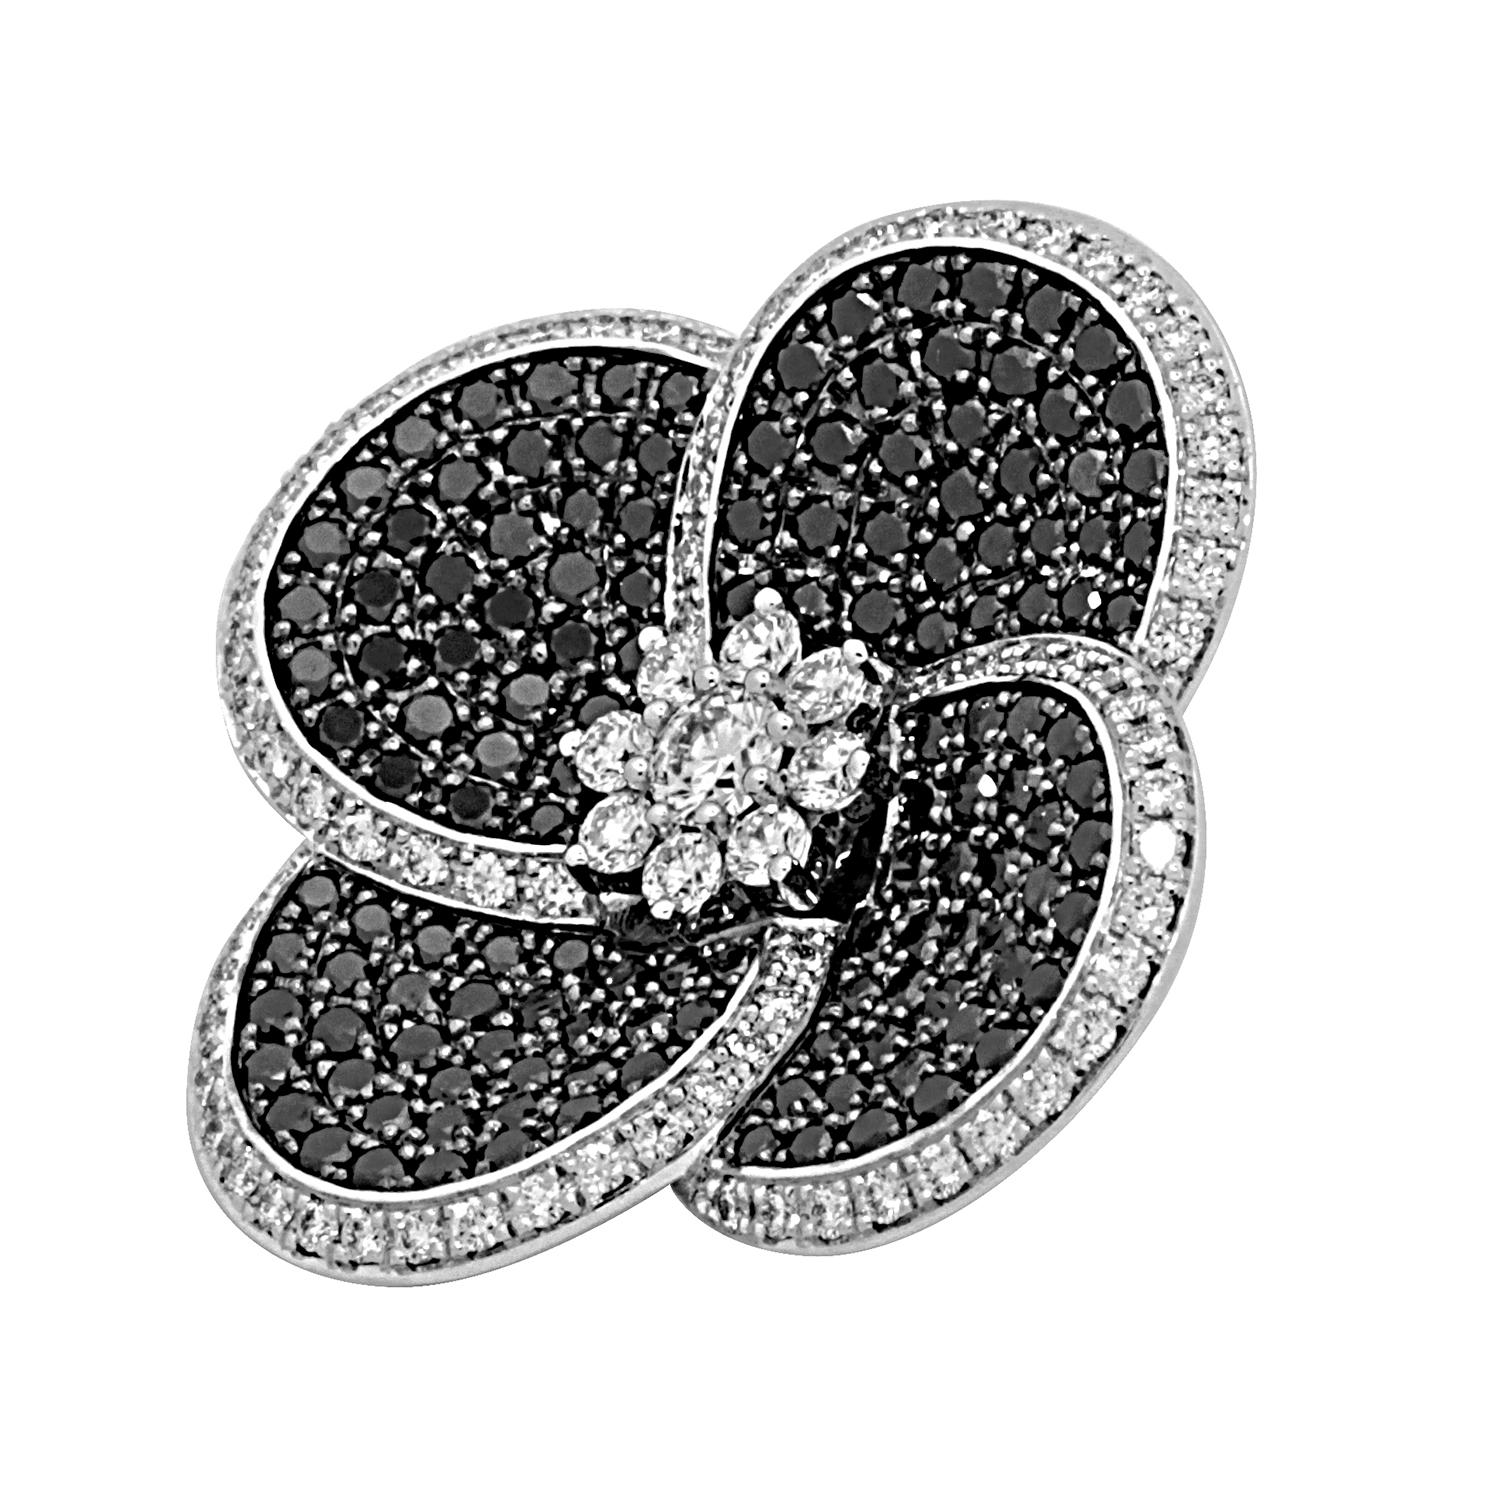 Round Cut 18 Karat White Gold Pendant Necklace with Brilliant Cut White and Black Diamonds For Sale